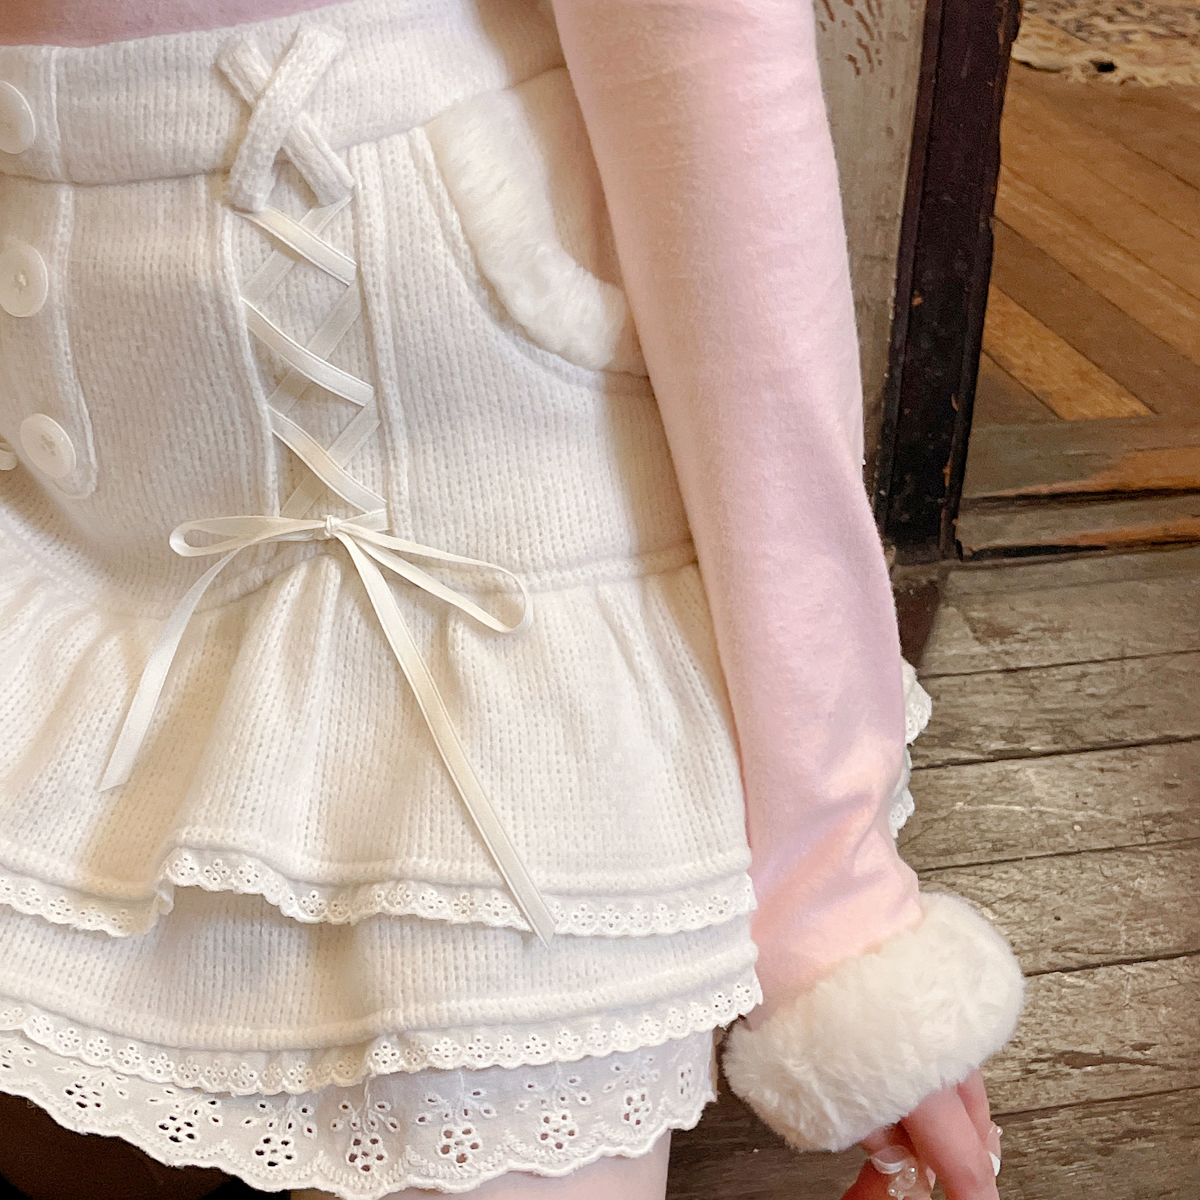 Kawaii Cute Fluffy Lace-up Knitted Cake Skirt MK16872